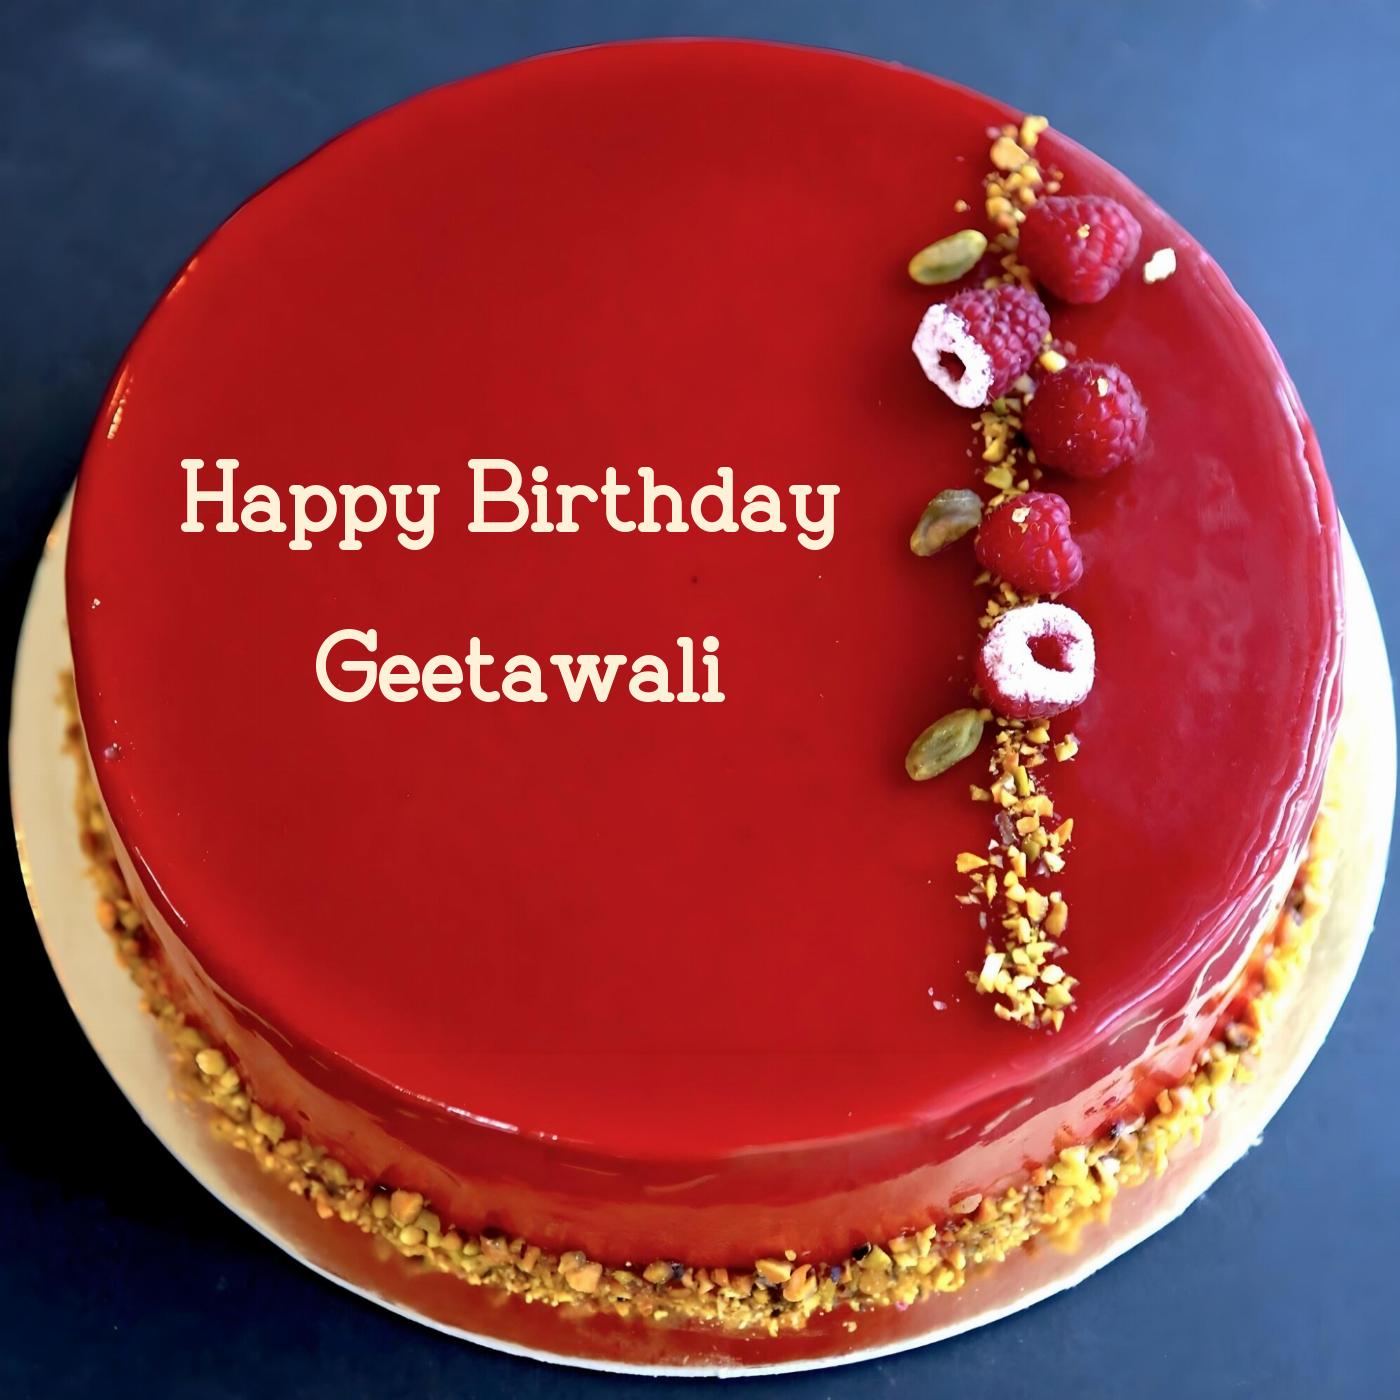 Happy Birthday Geetawali Red Raspberry Cake